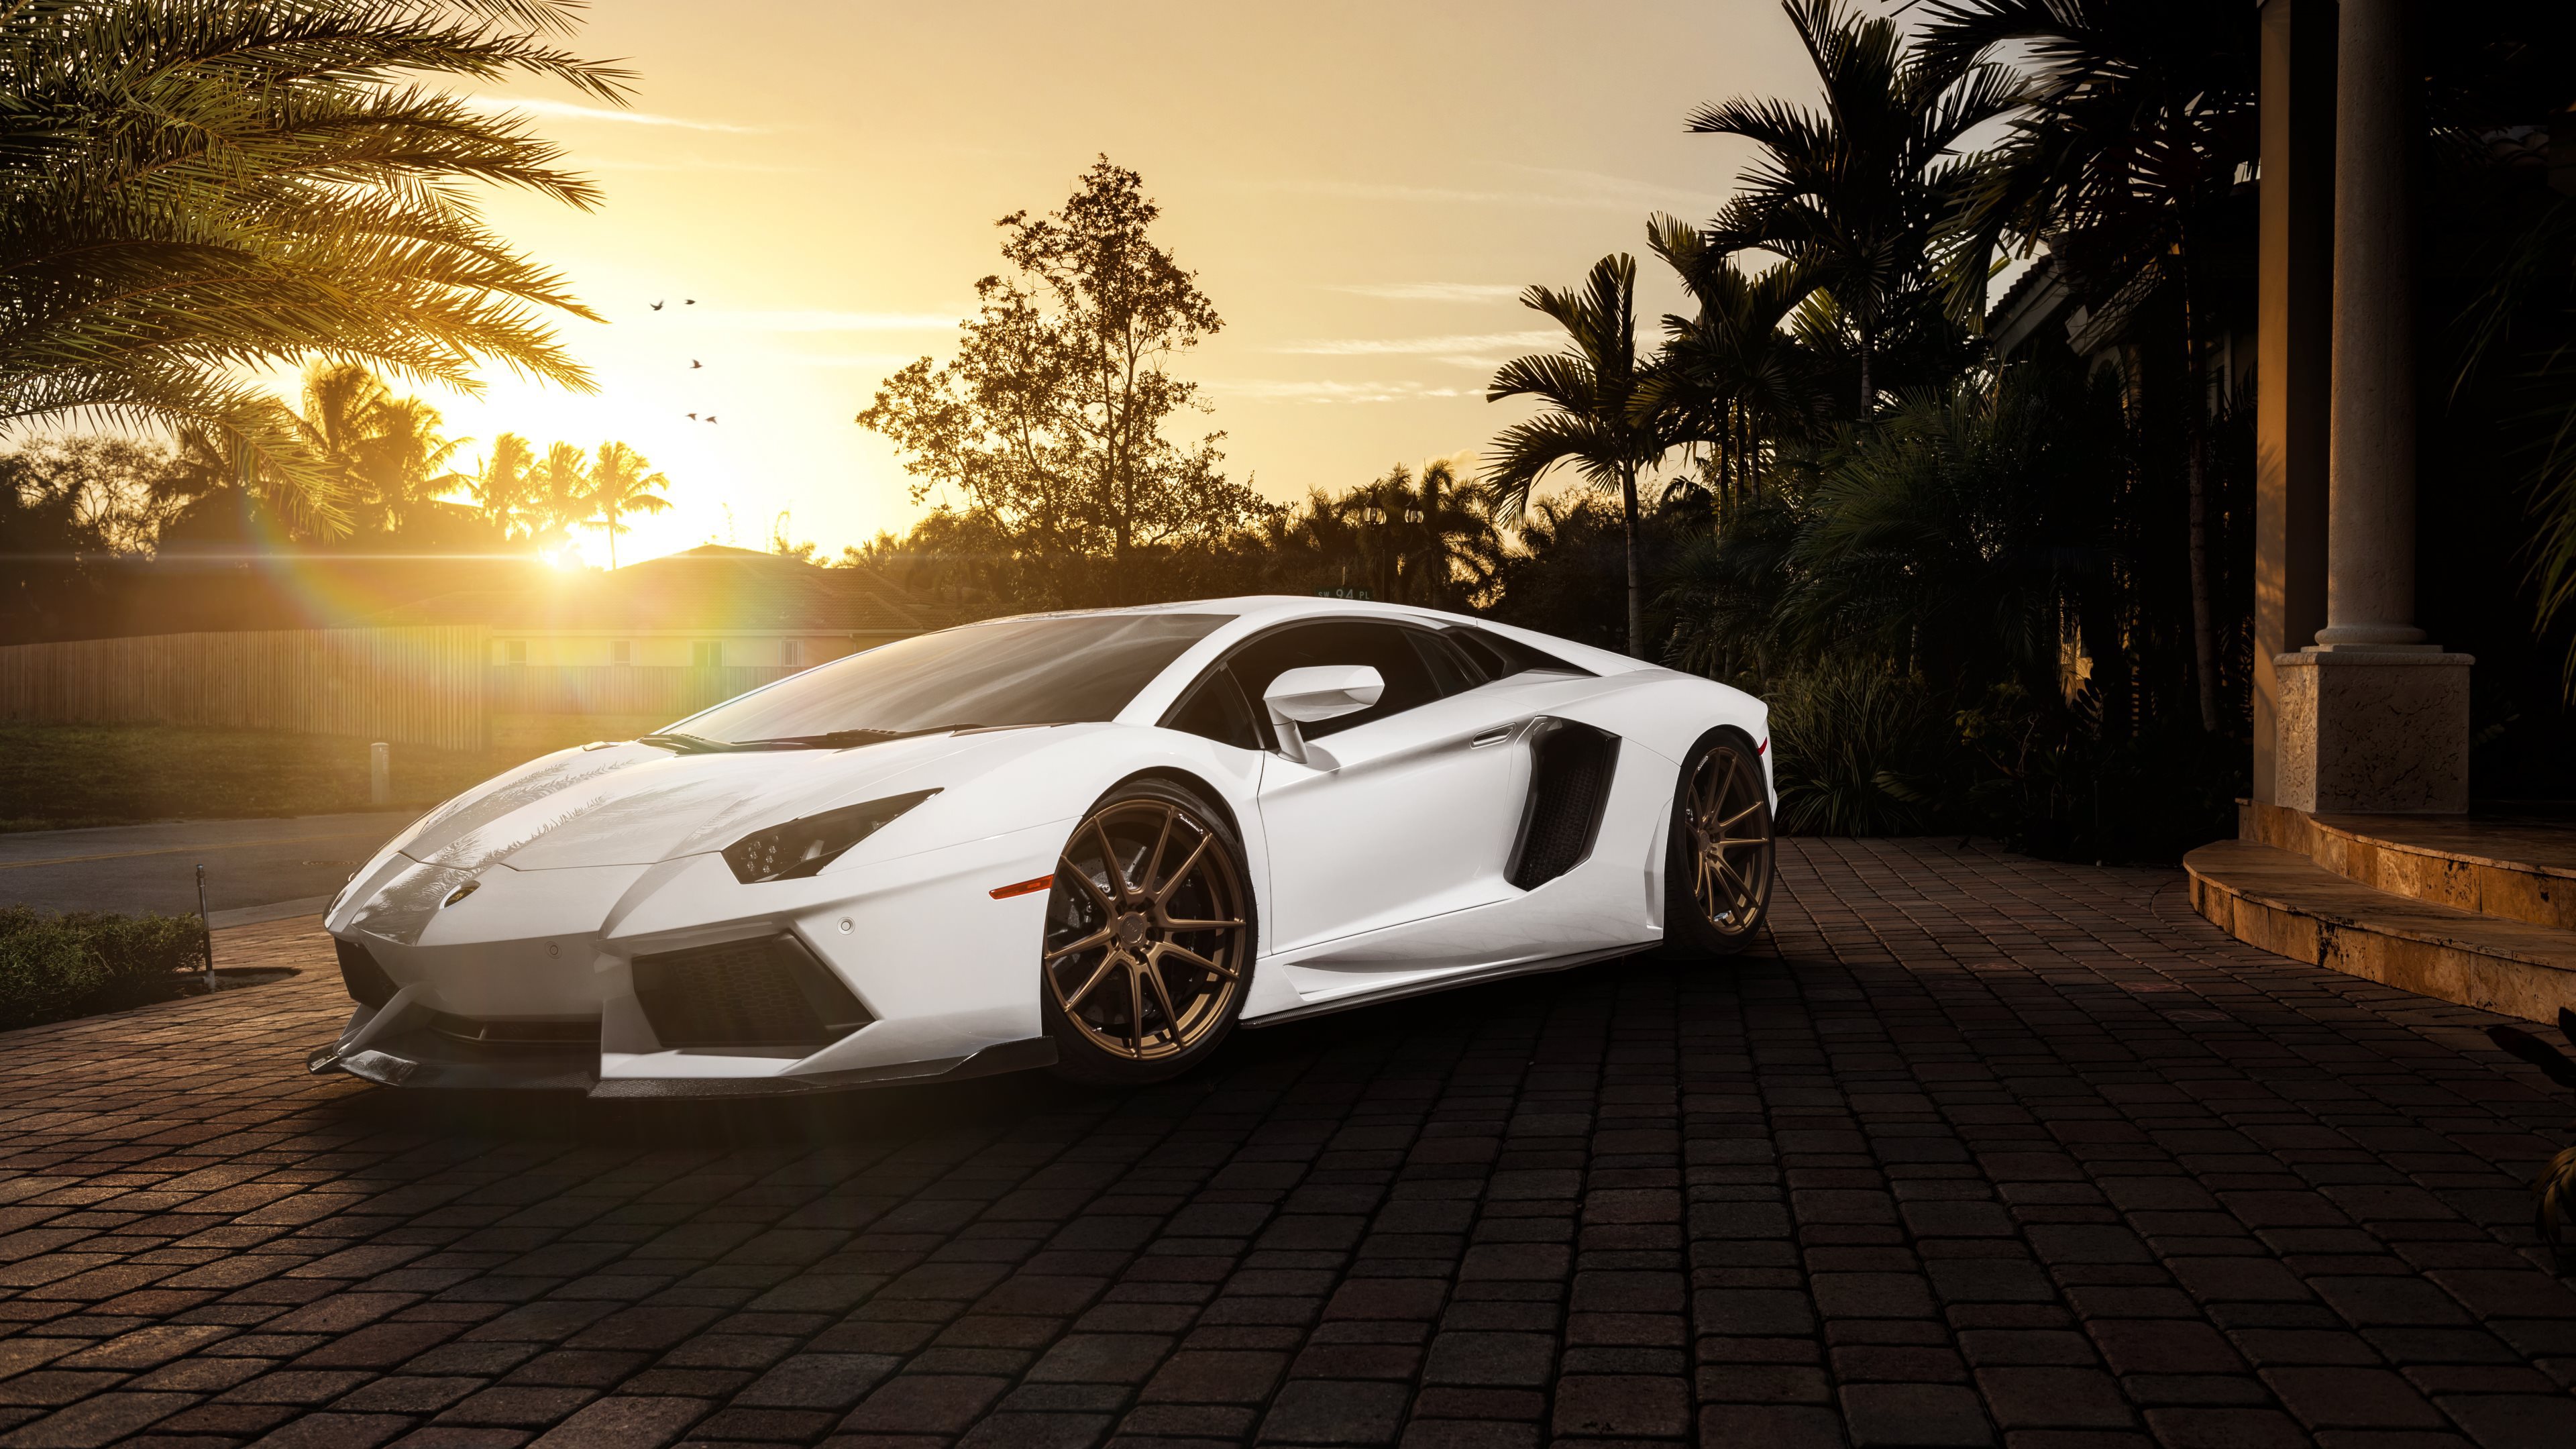 Lamborghini Aventador Wallpapers Images Photos Pictures Backgrounds